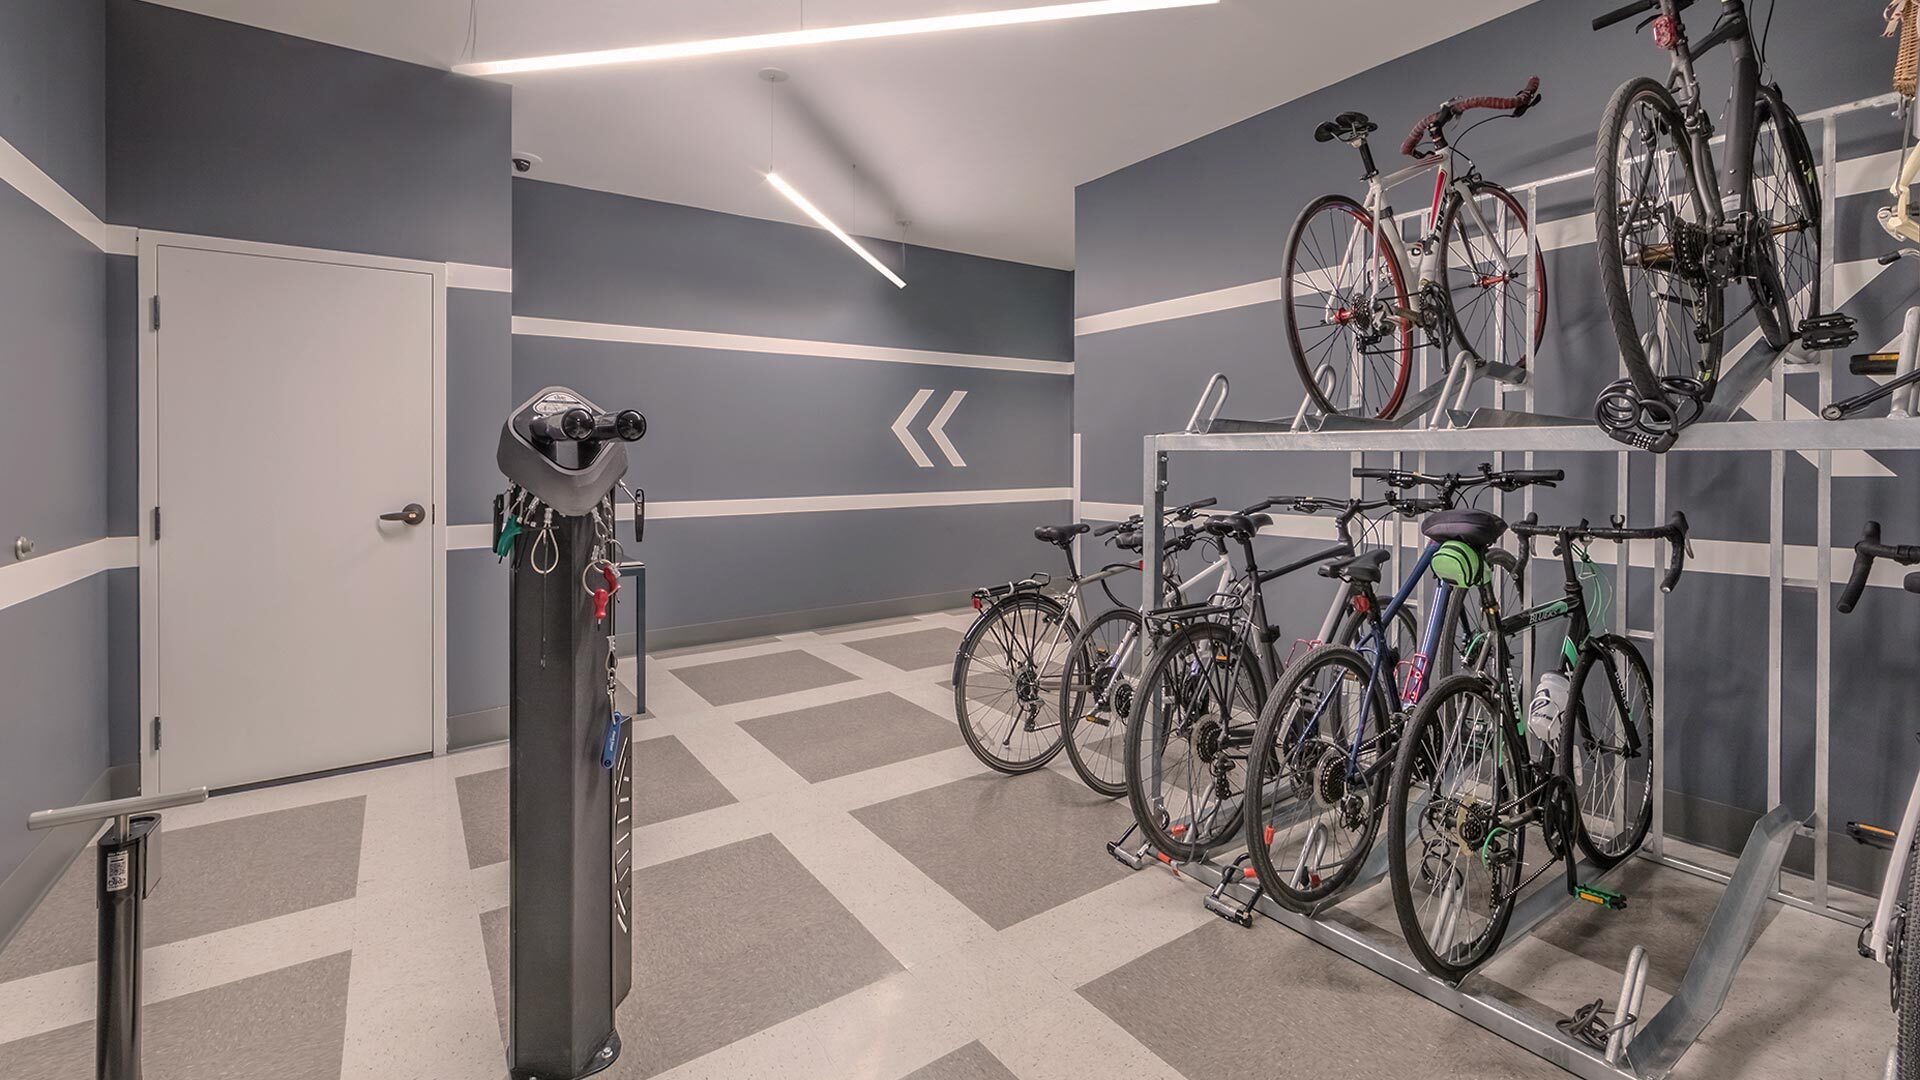 The james amenities bike room